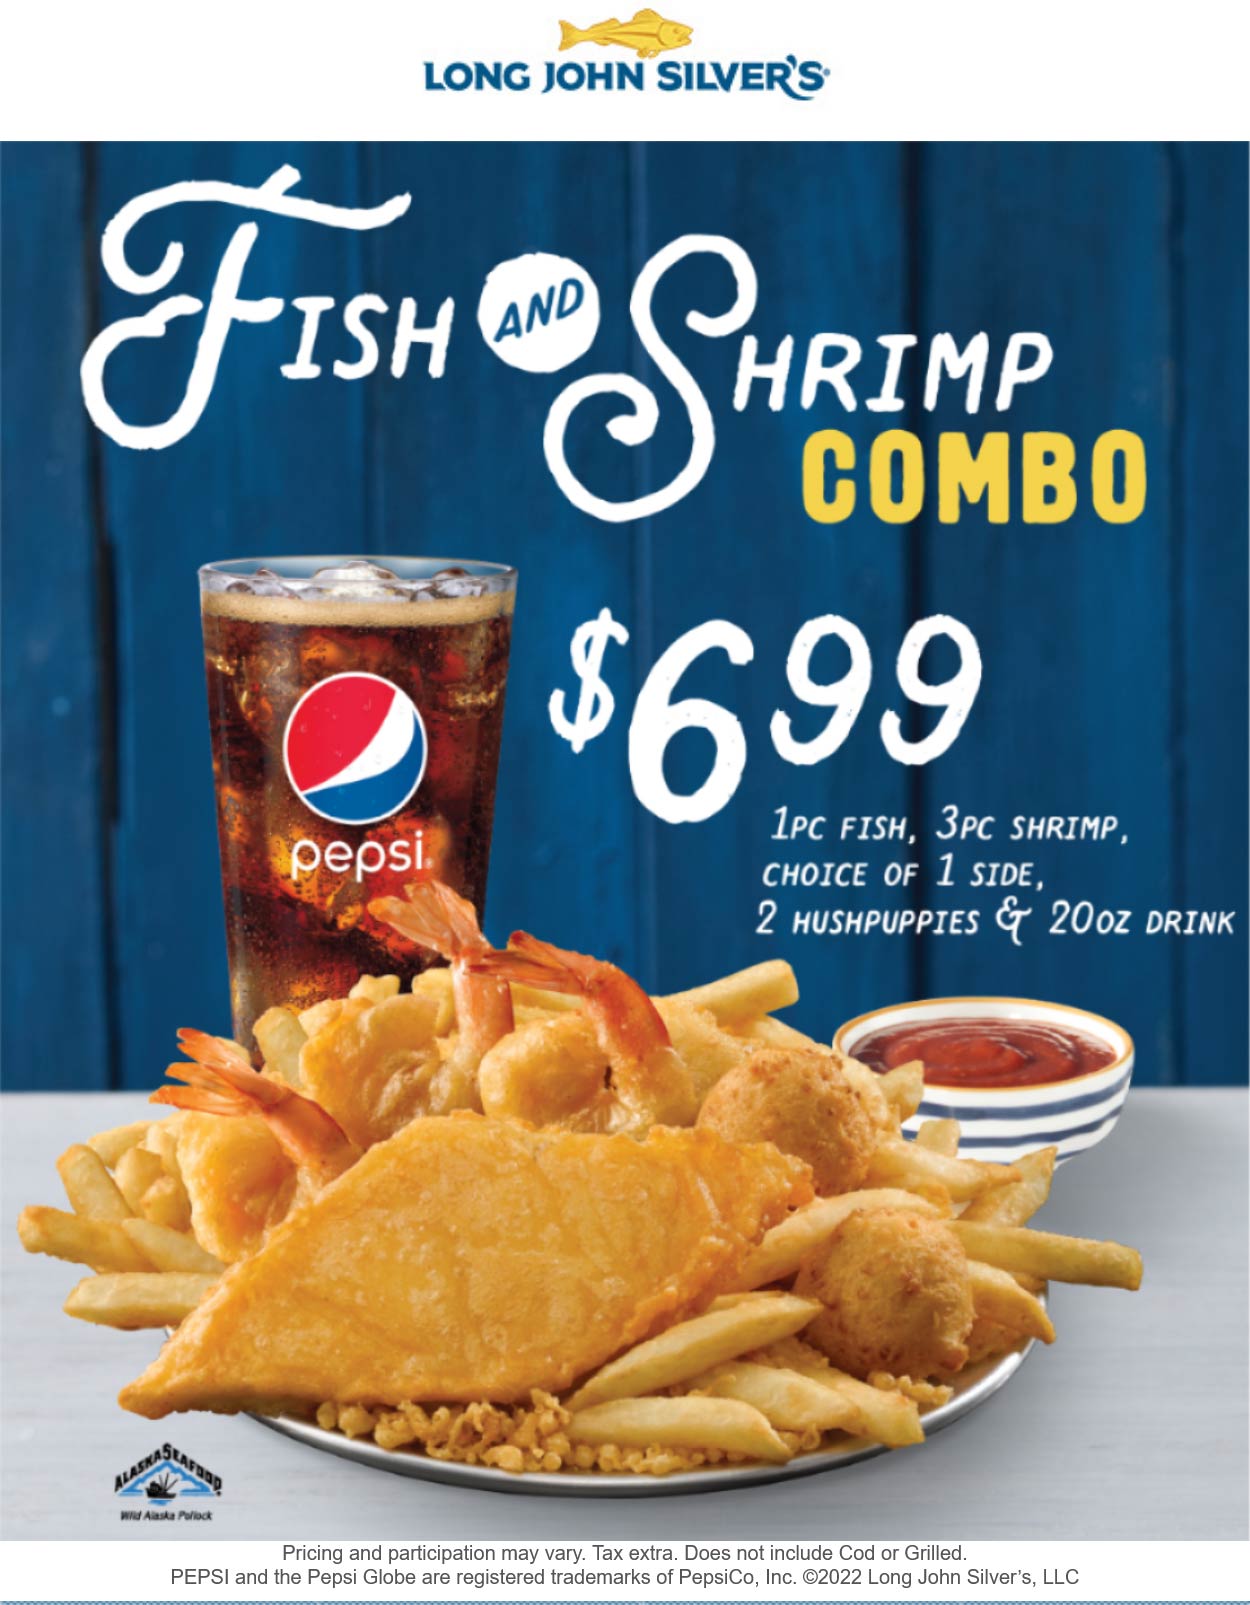 Long John Silvers restaurants Coupon  Fish + 3 shrimp + 2 hushpuppies + drink = $7 at Long John Silvers #longjohnsilvers 